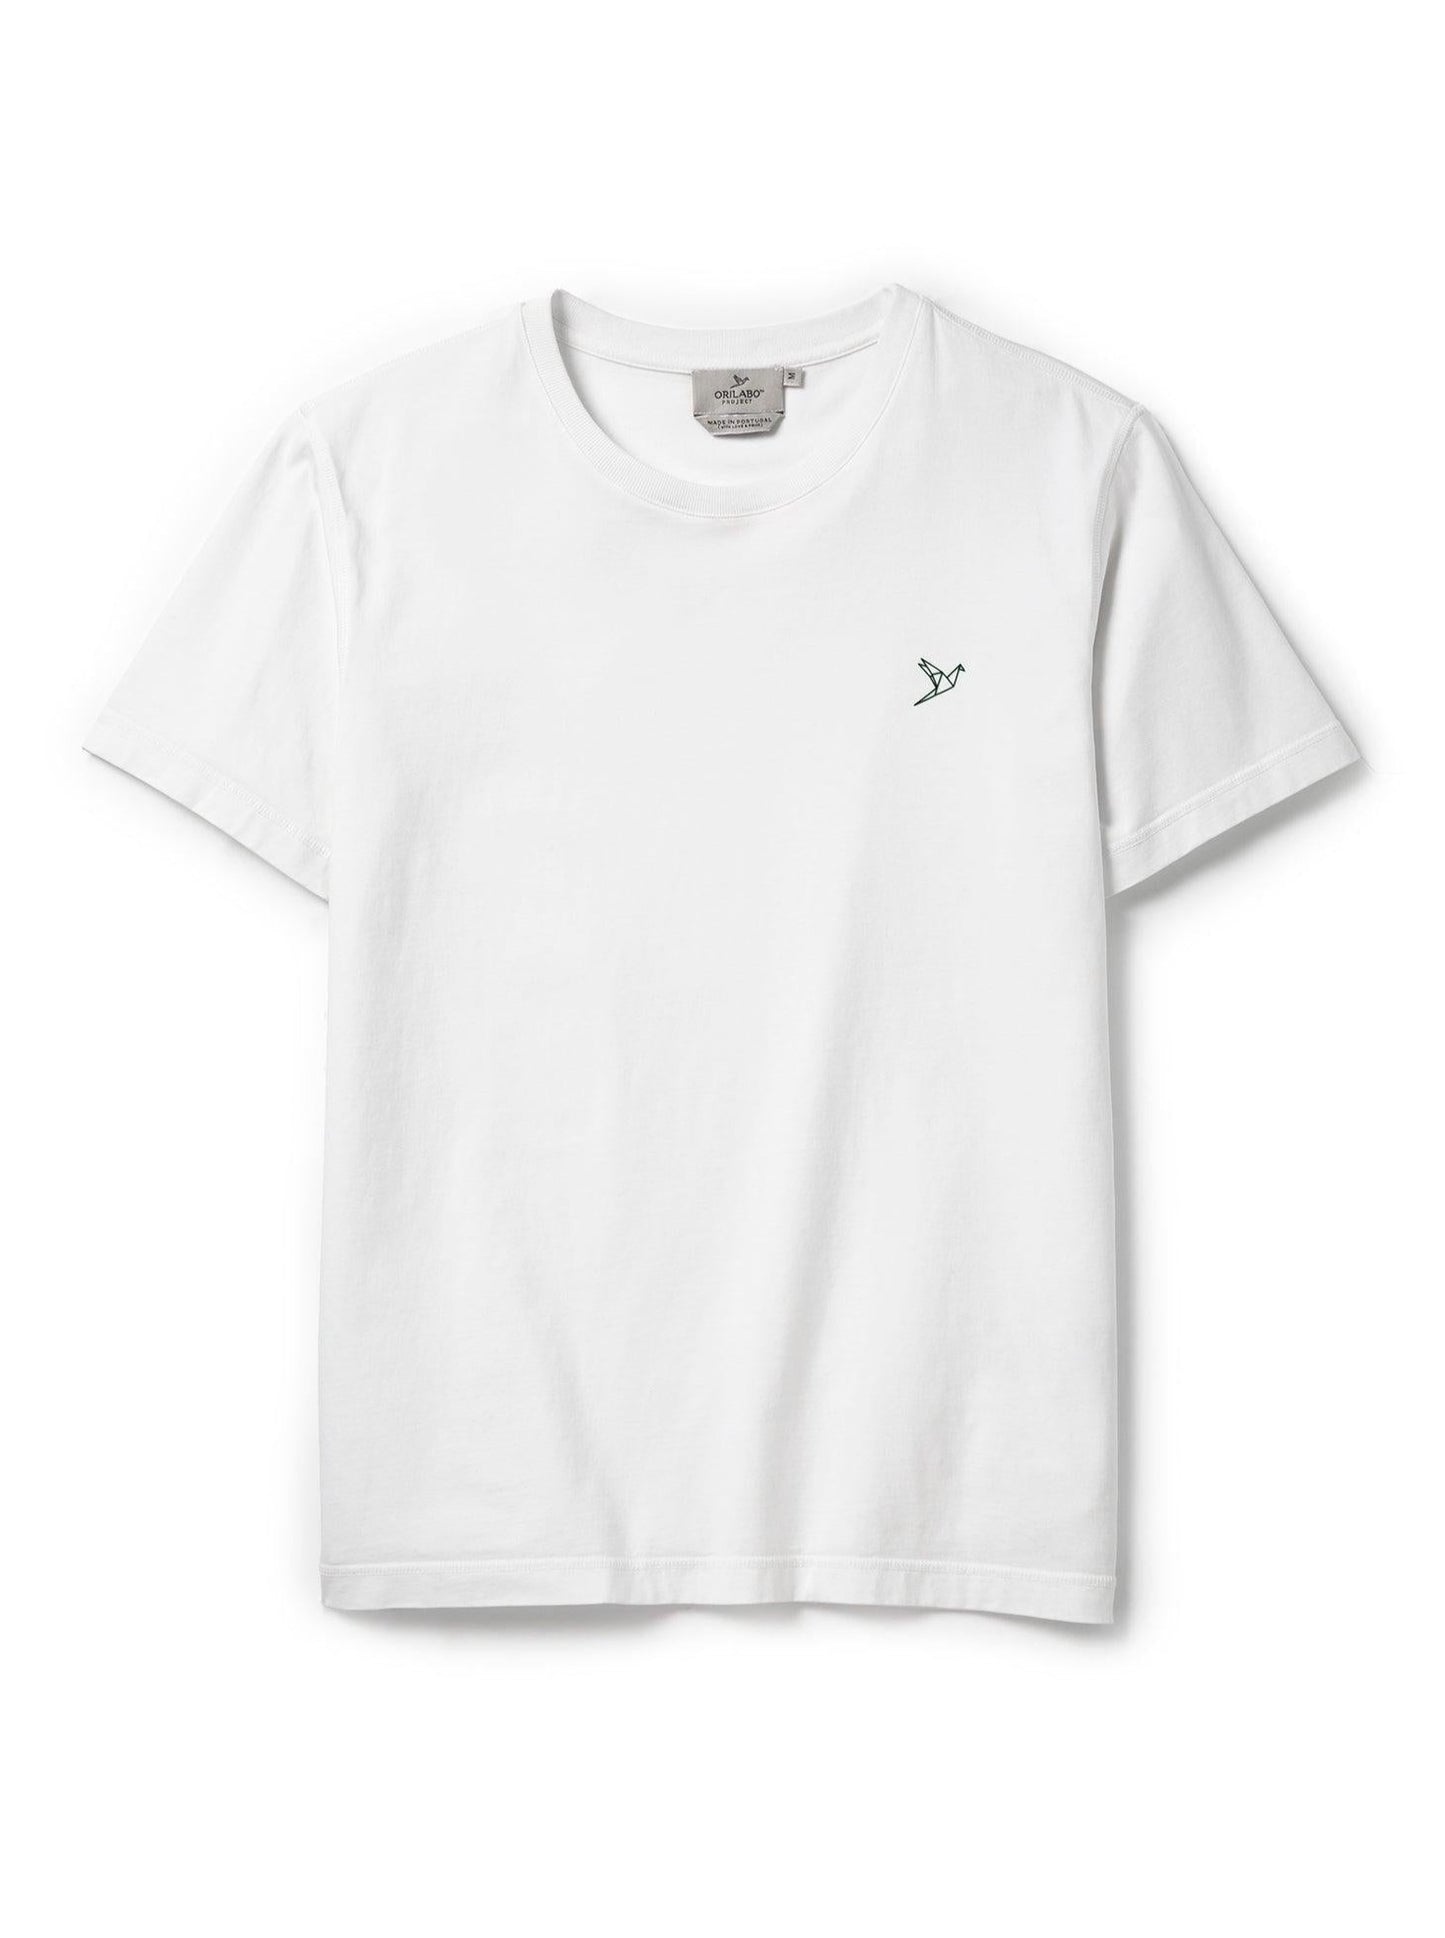 
                  
                    Men's O-Roses T-shirt - White - ORILABO Project
                  
                